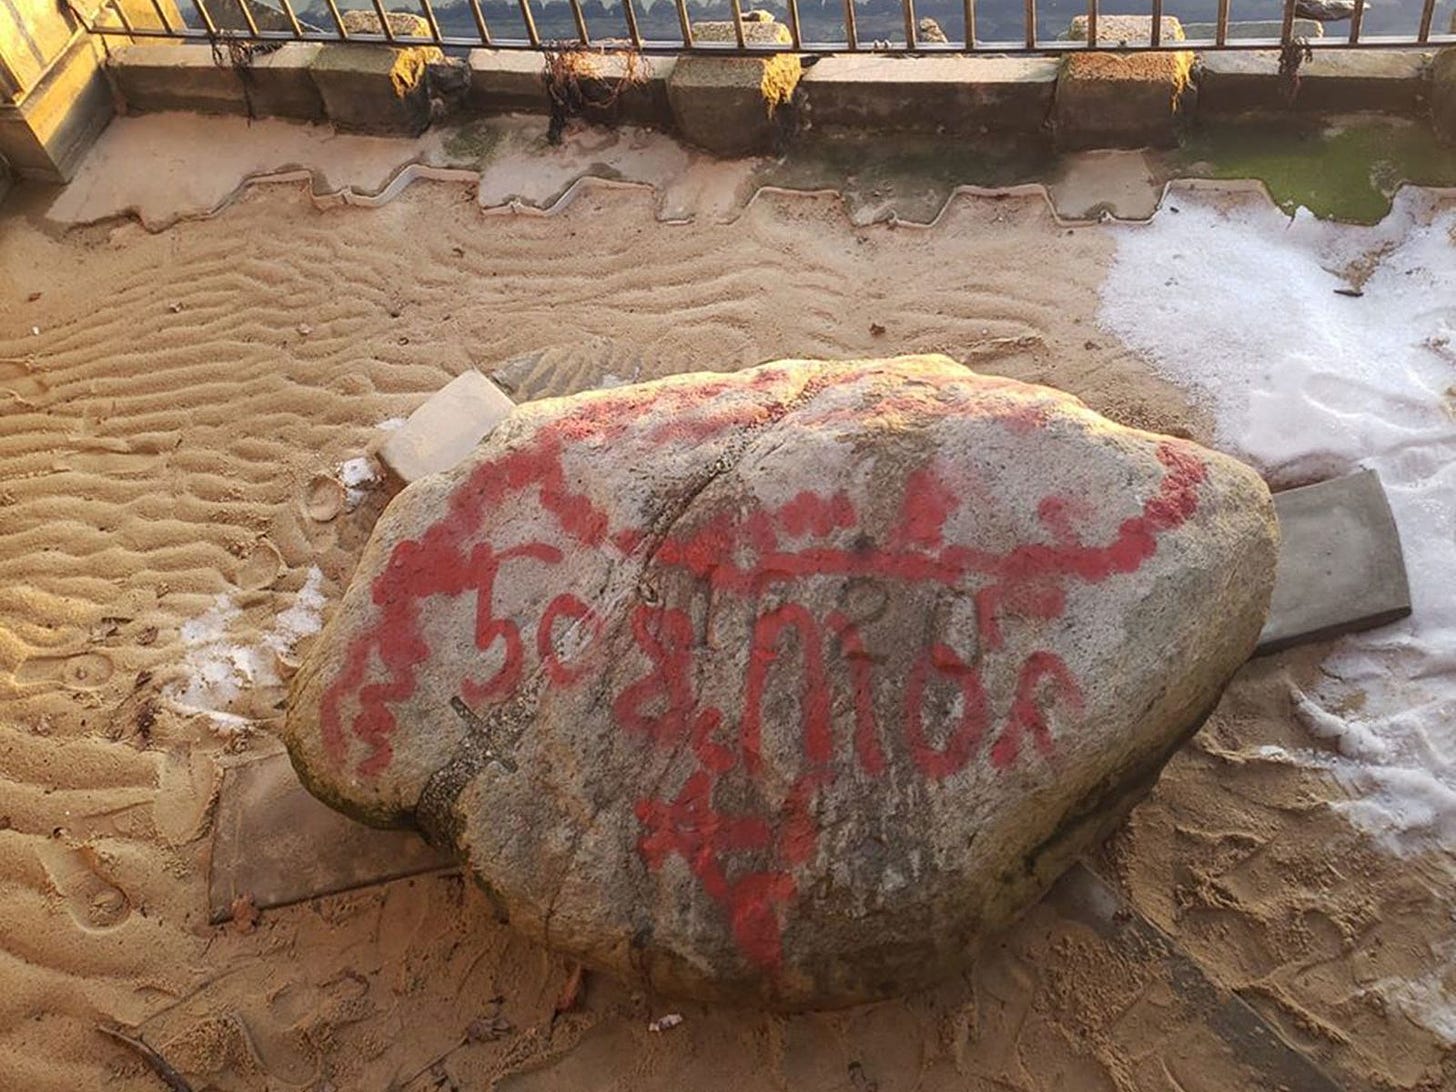 Plymouth Rock vandalized with graffiti | CNN